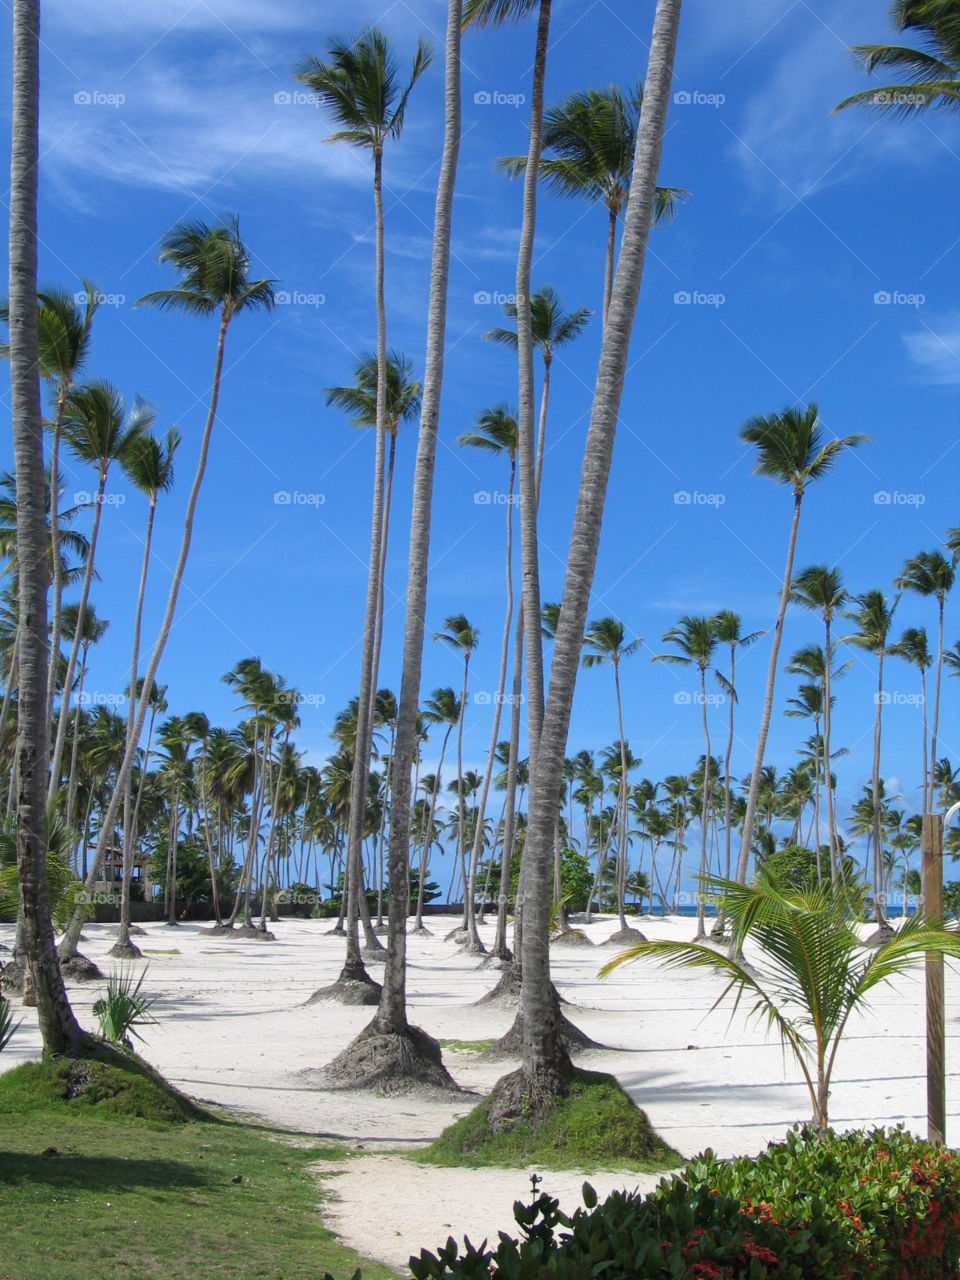 Beach trees